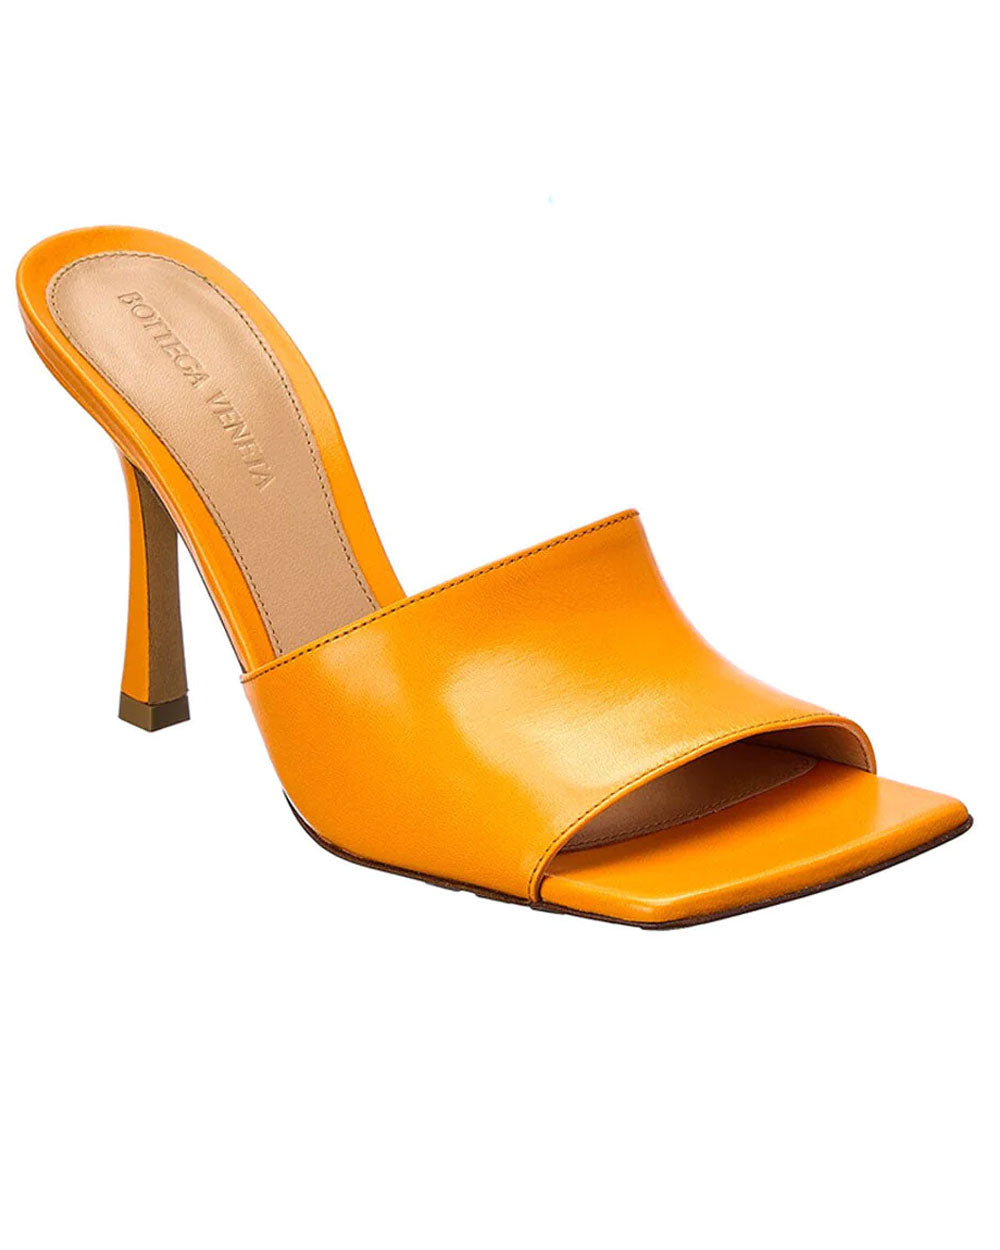 Bottega Veneta Stretch Sandal in Tangerine – Stanley Korshak